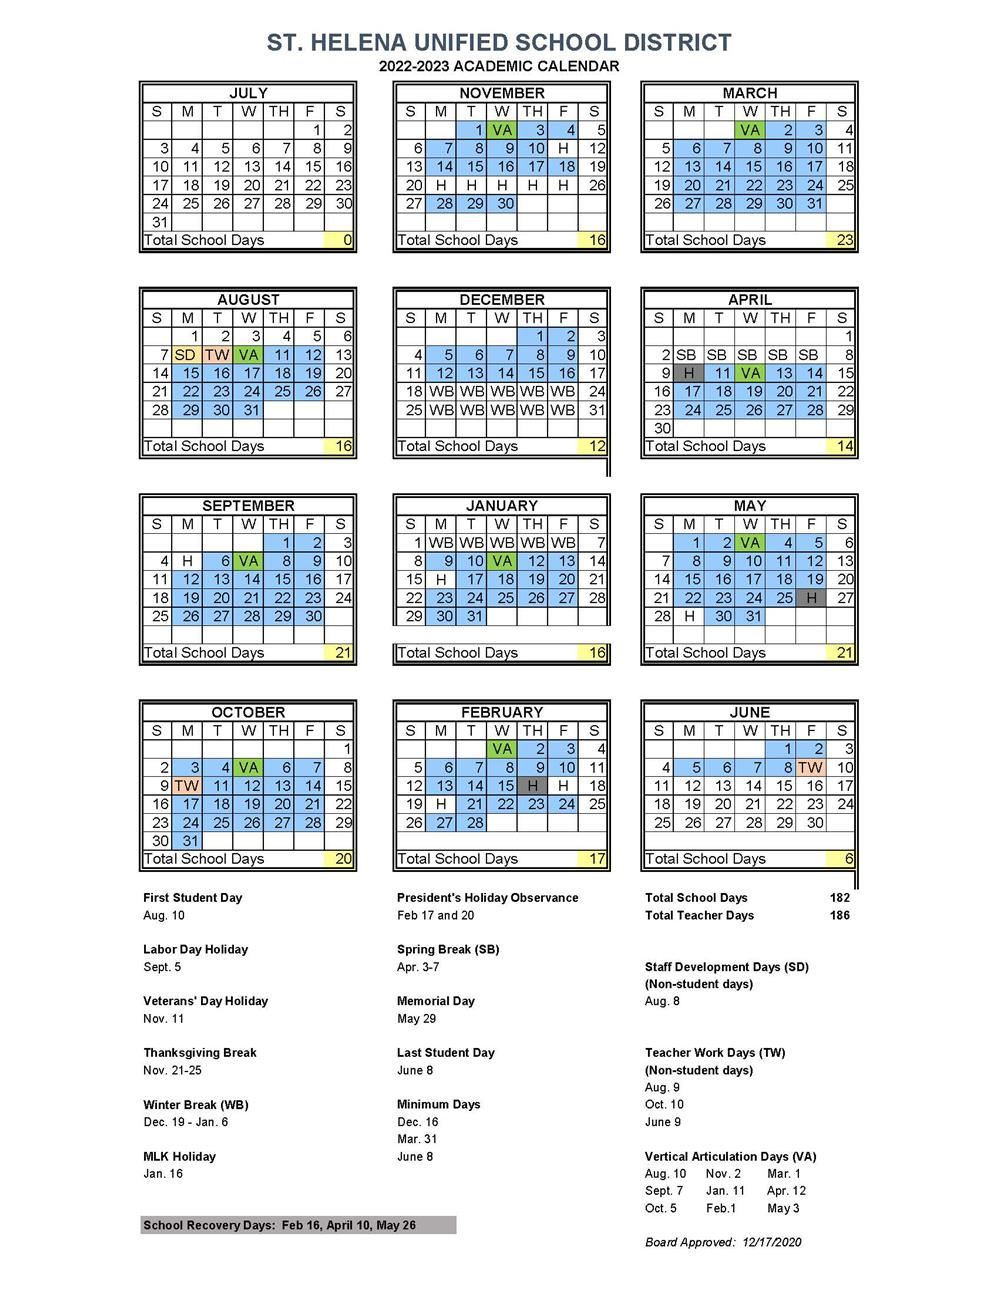 Academic Calendar / 2022-2023